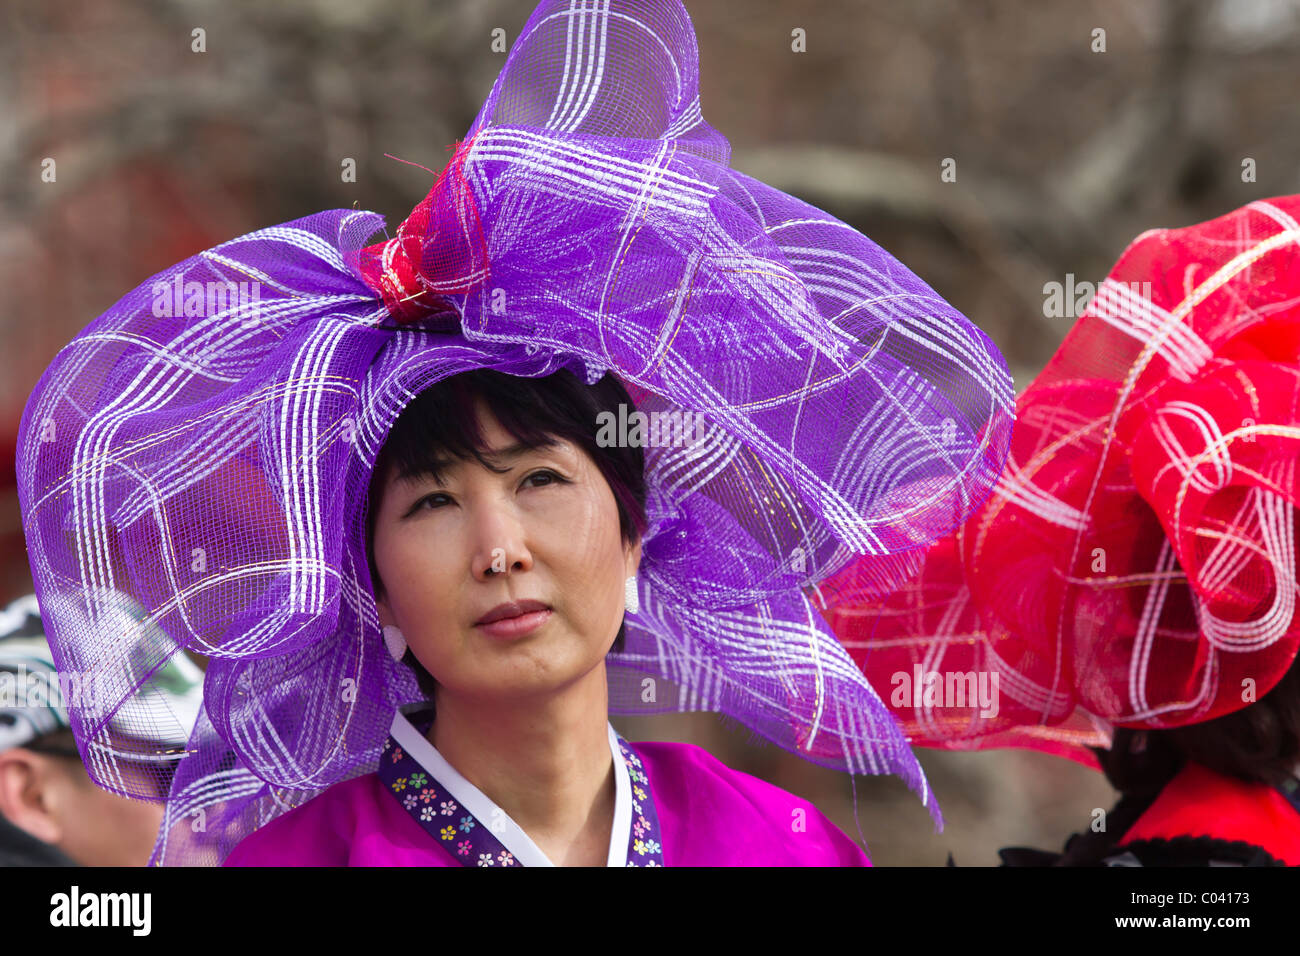 Korean woman in purple headdress riding on a float in the 2011 Lunar ...